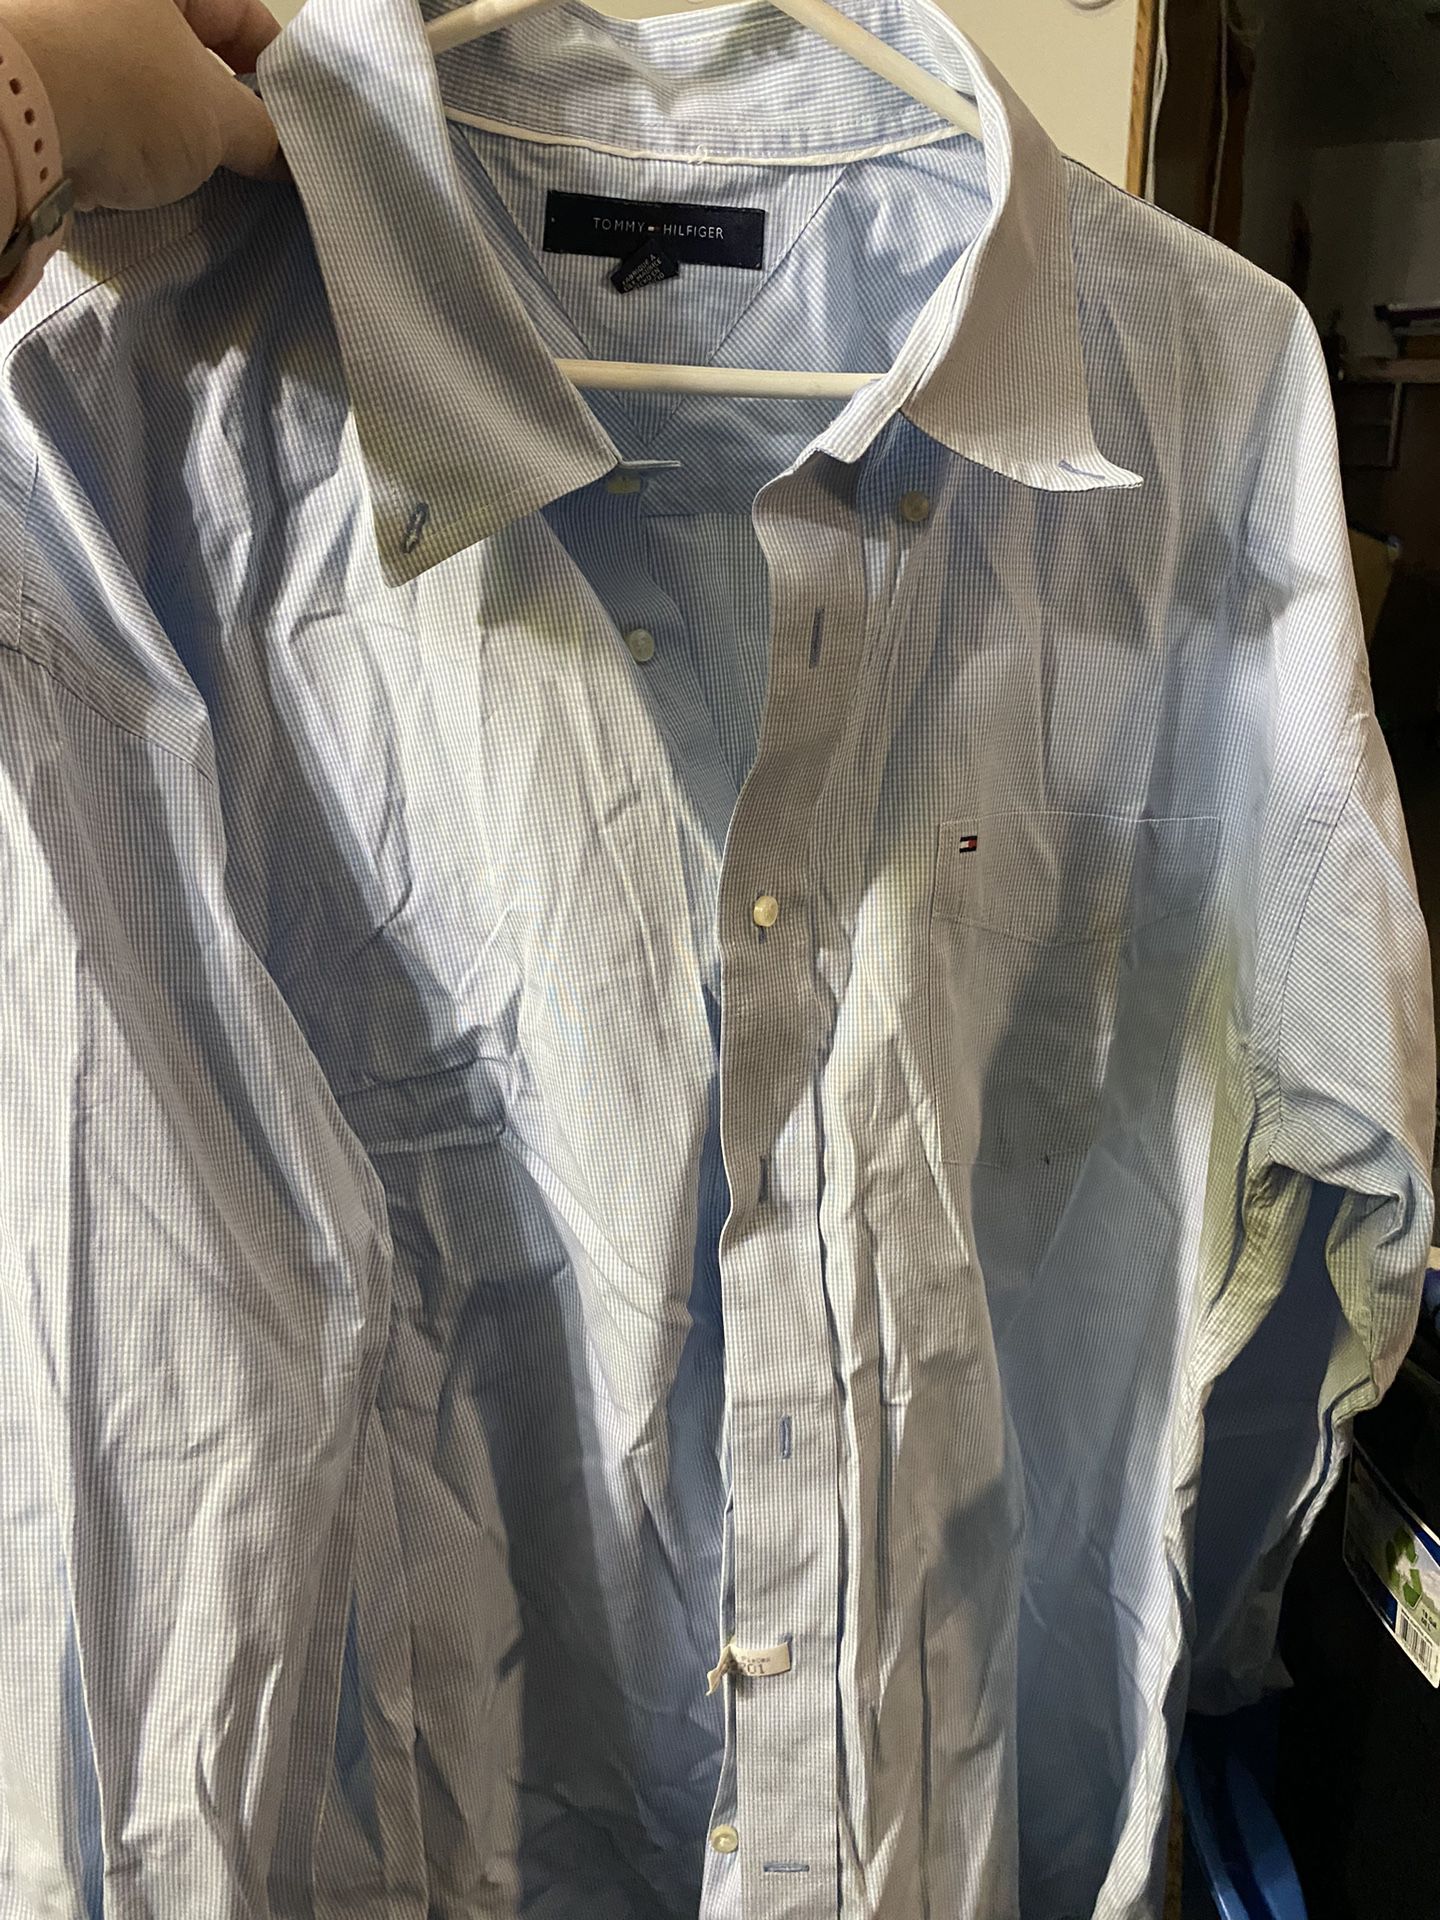 Blue and White XL Tommy Hilfiger Dress Shirt